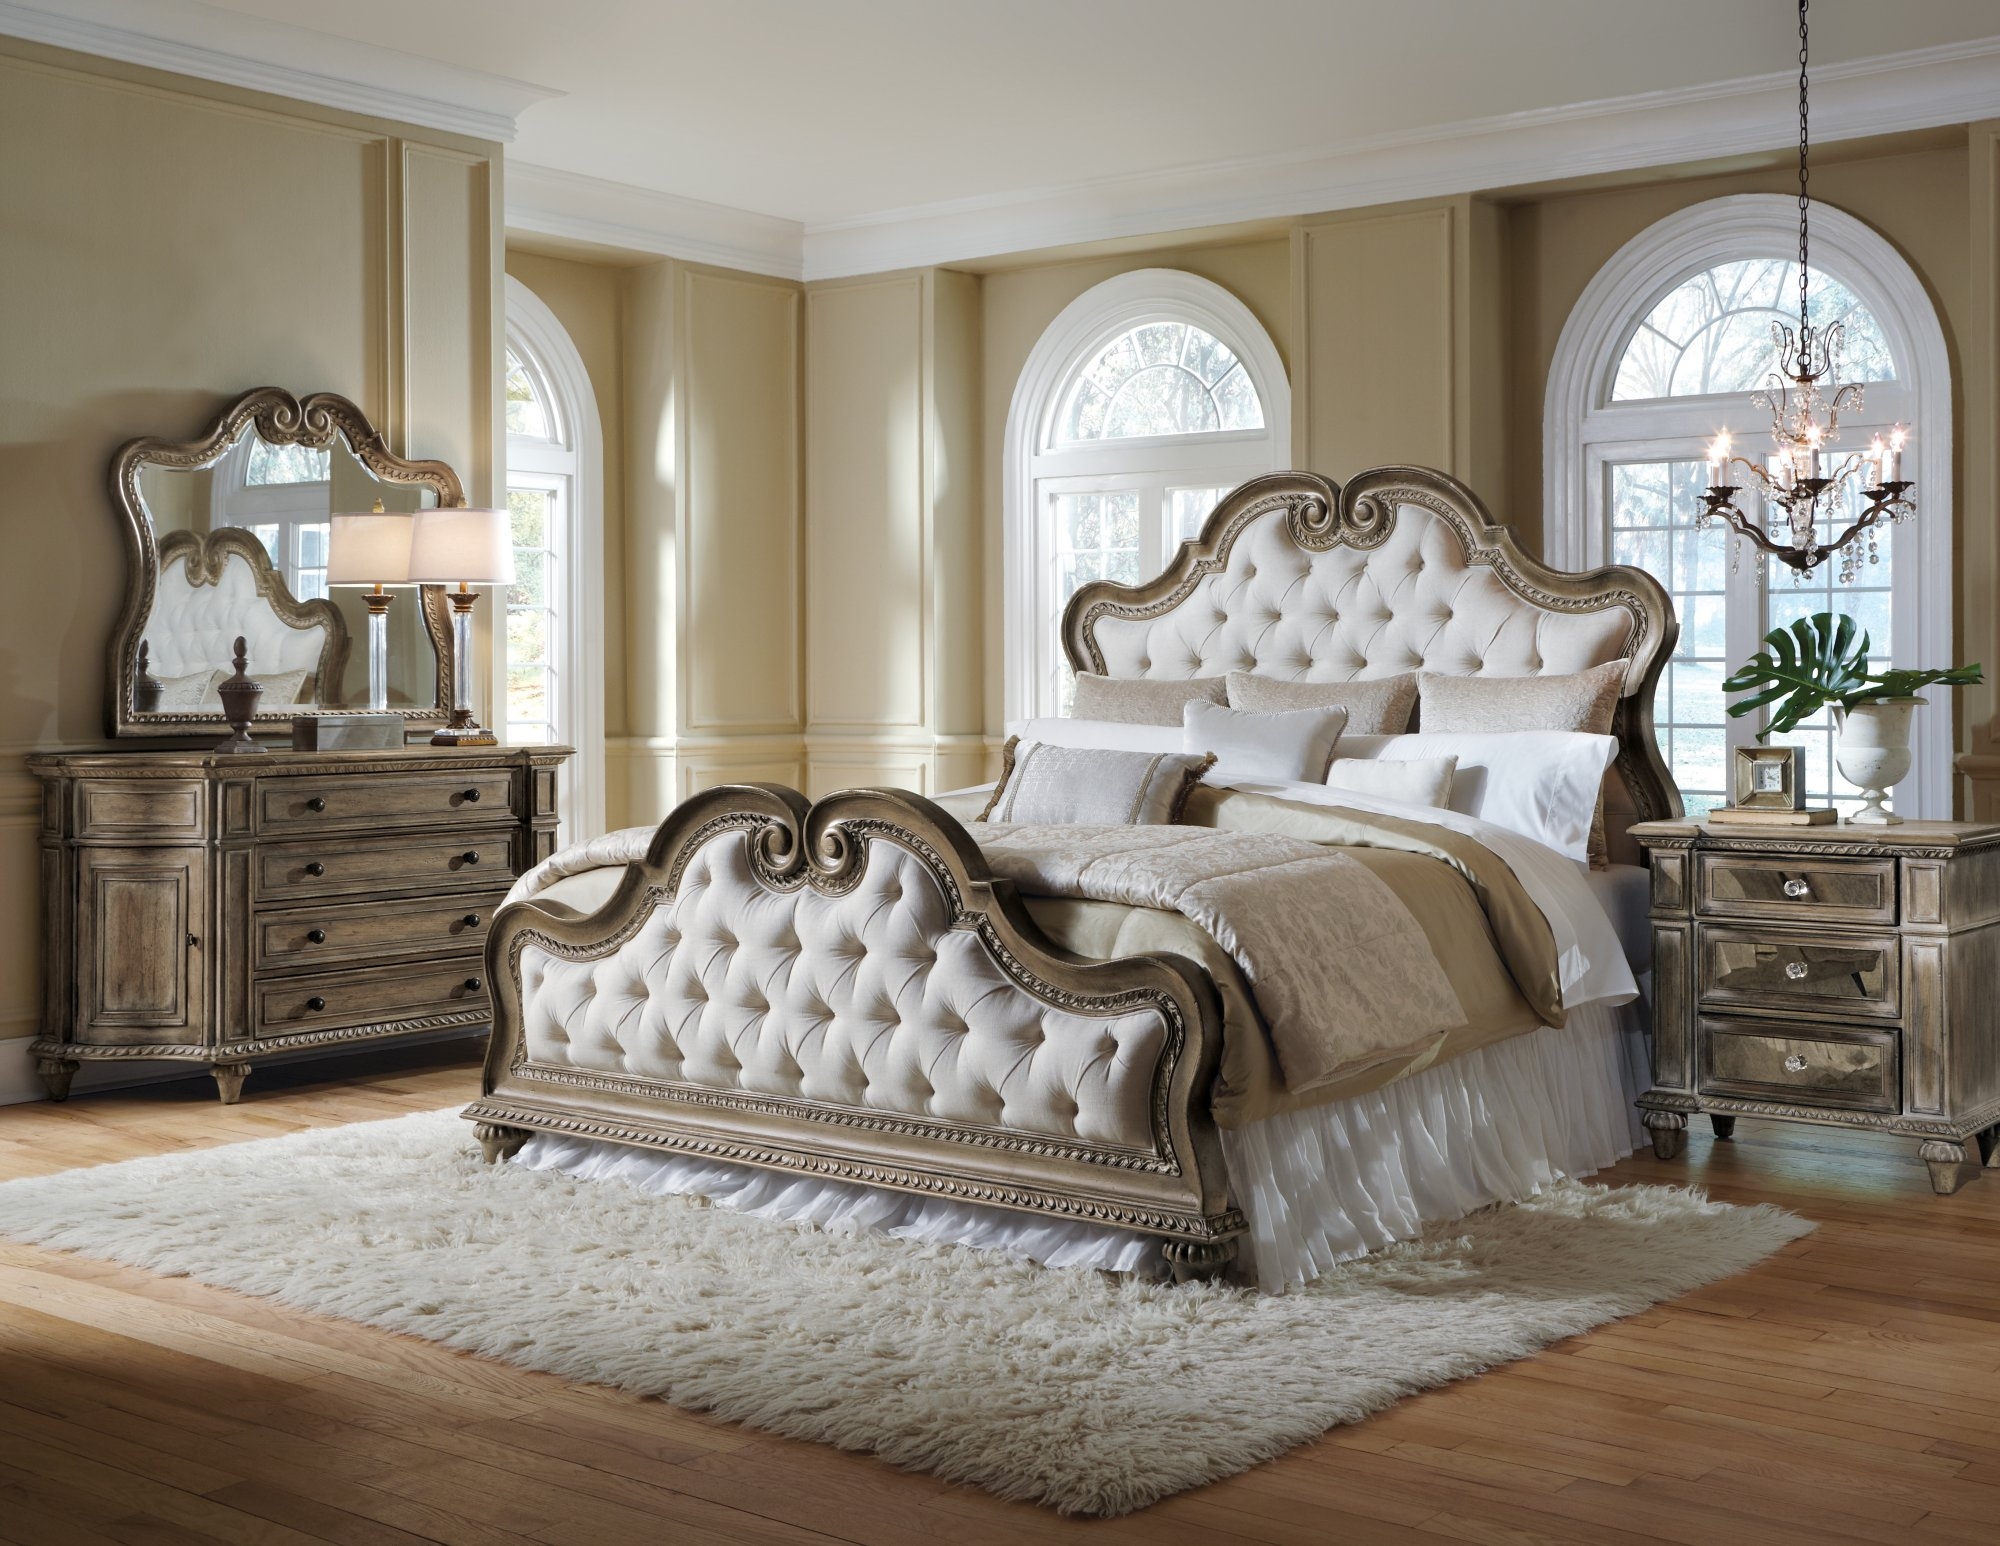 Pulaski arabella bedroom collection